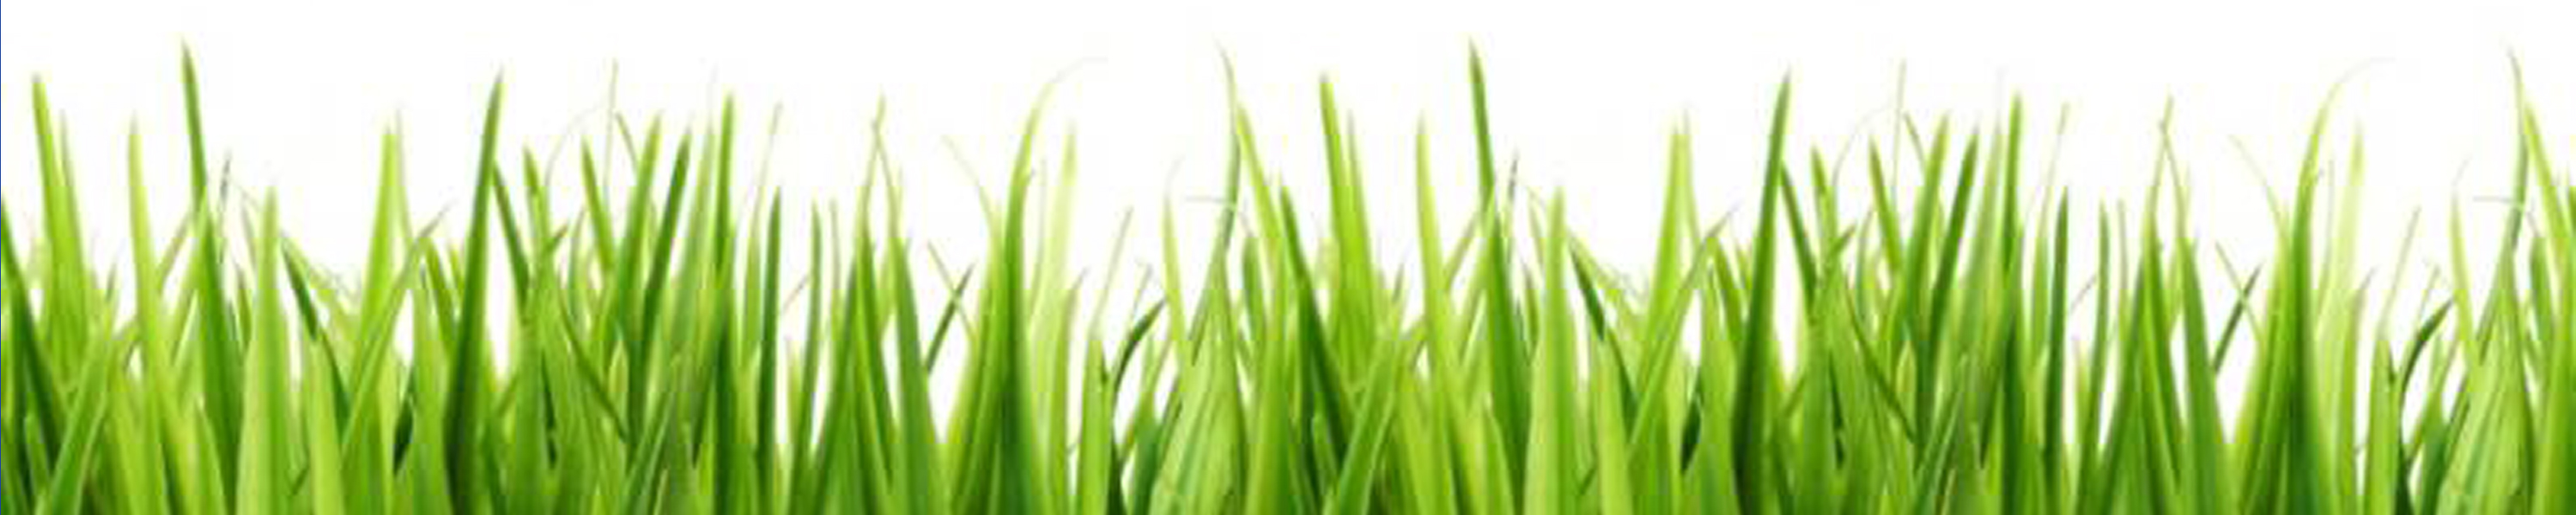 Free clip art grass clipart image 2